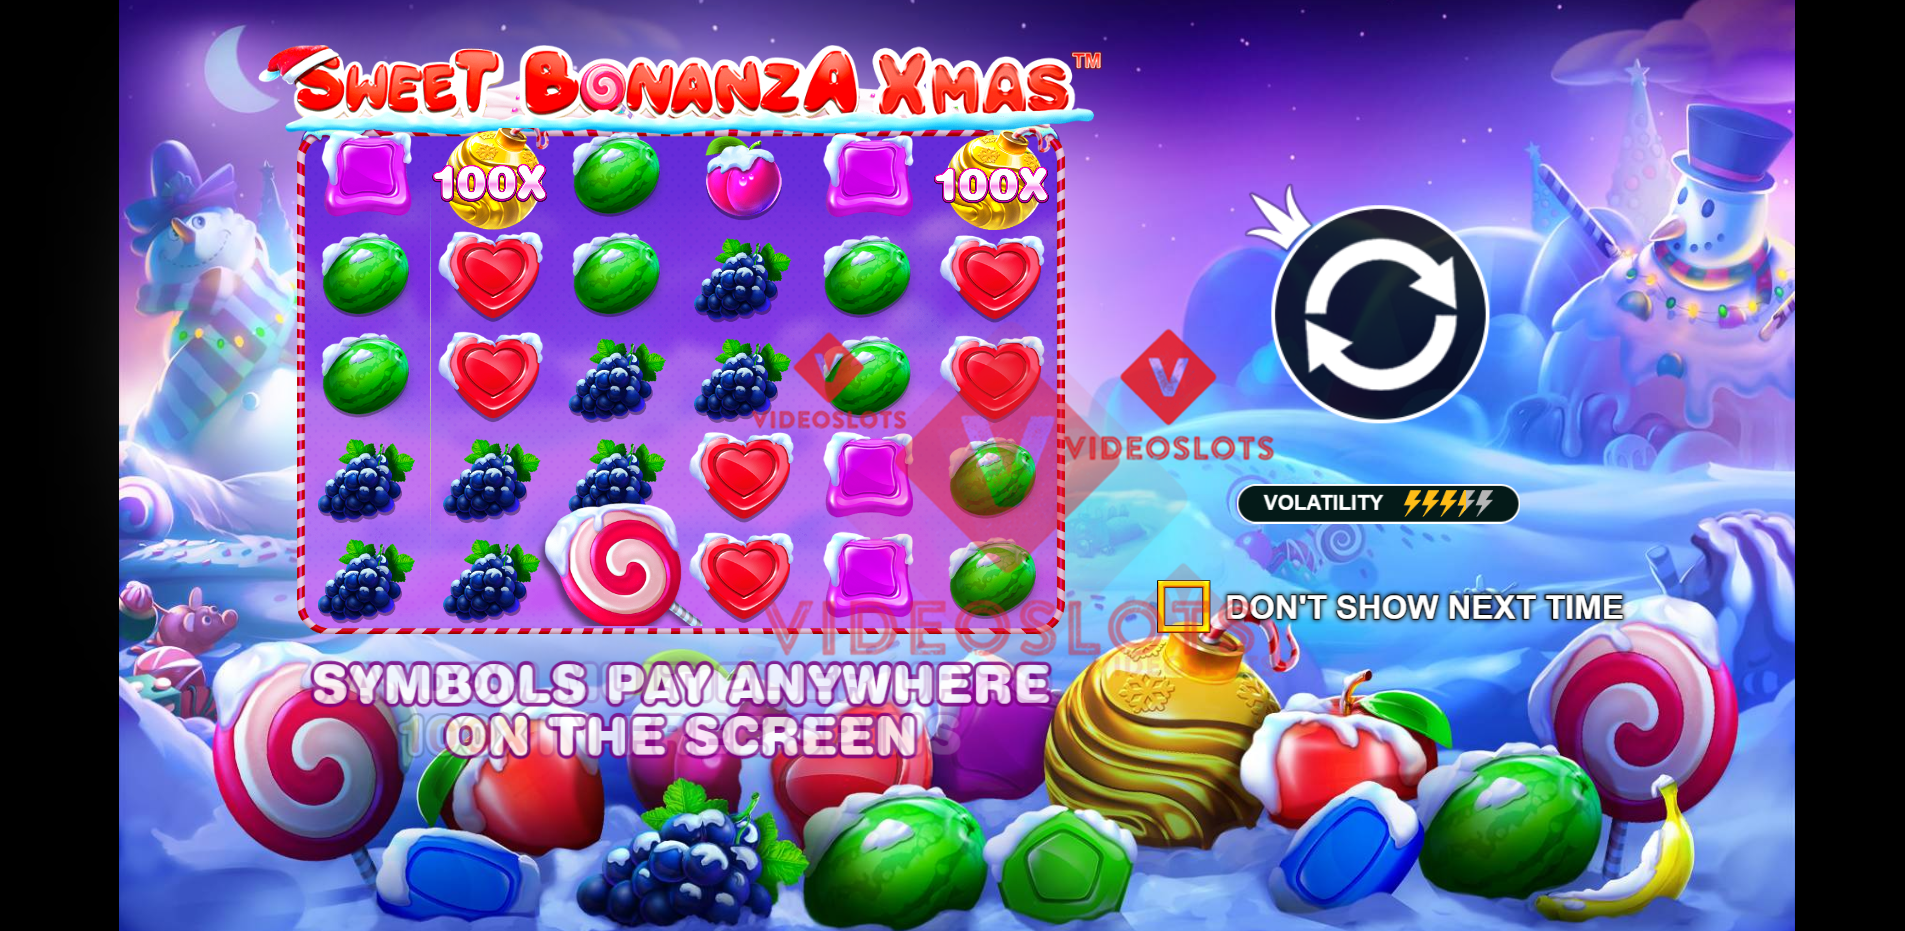 Game Intro for Sweet Bonanza Xmas slot by Pragmatic Play